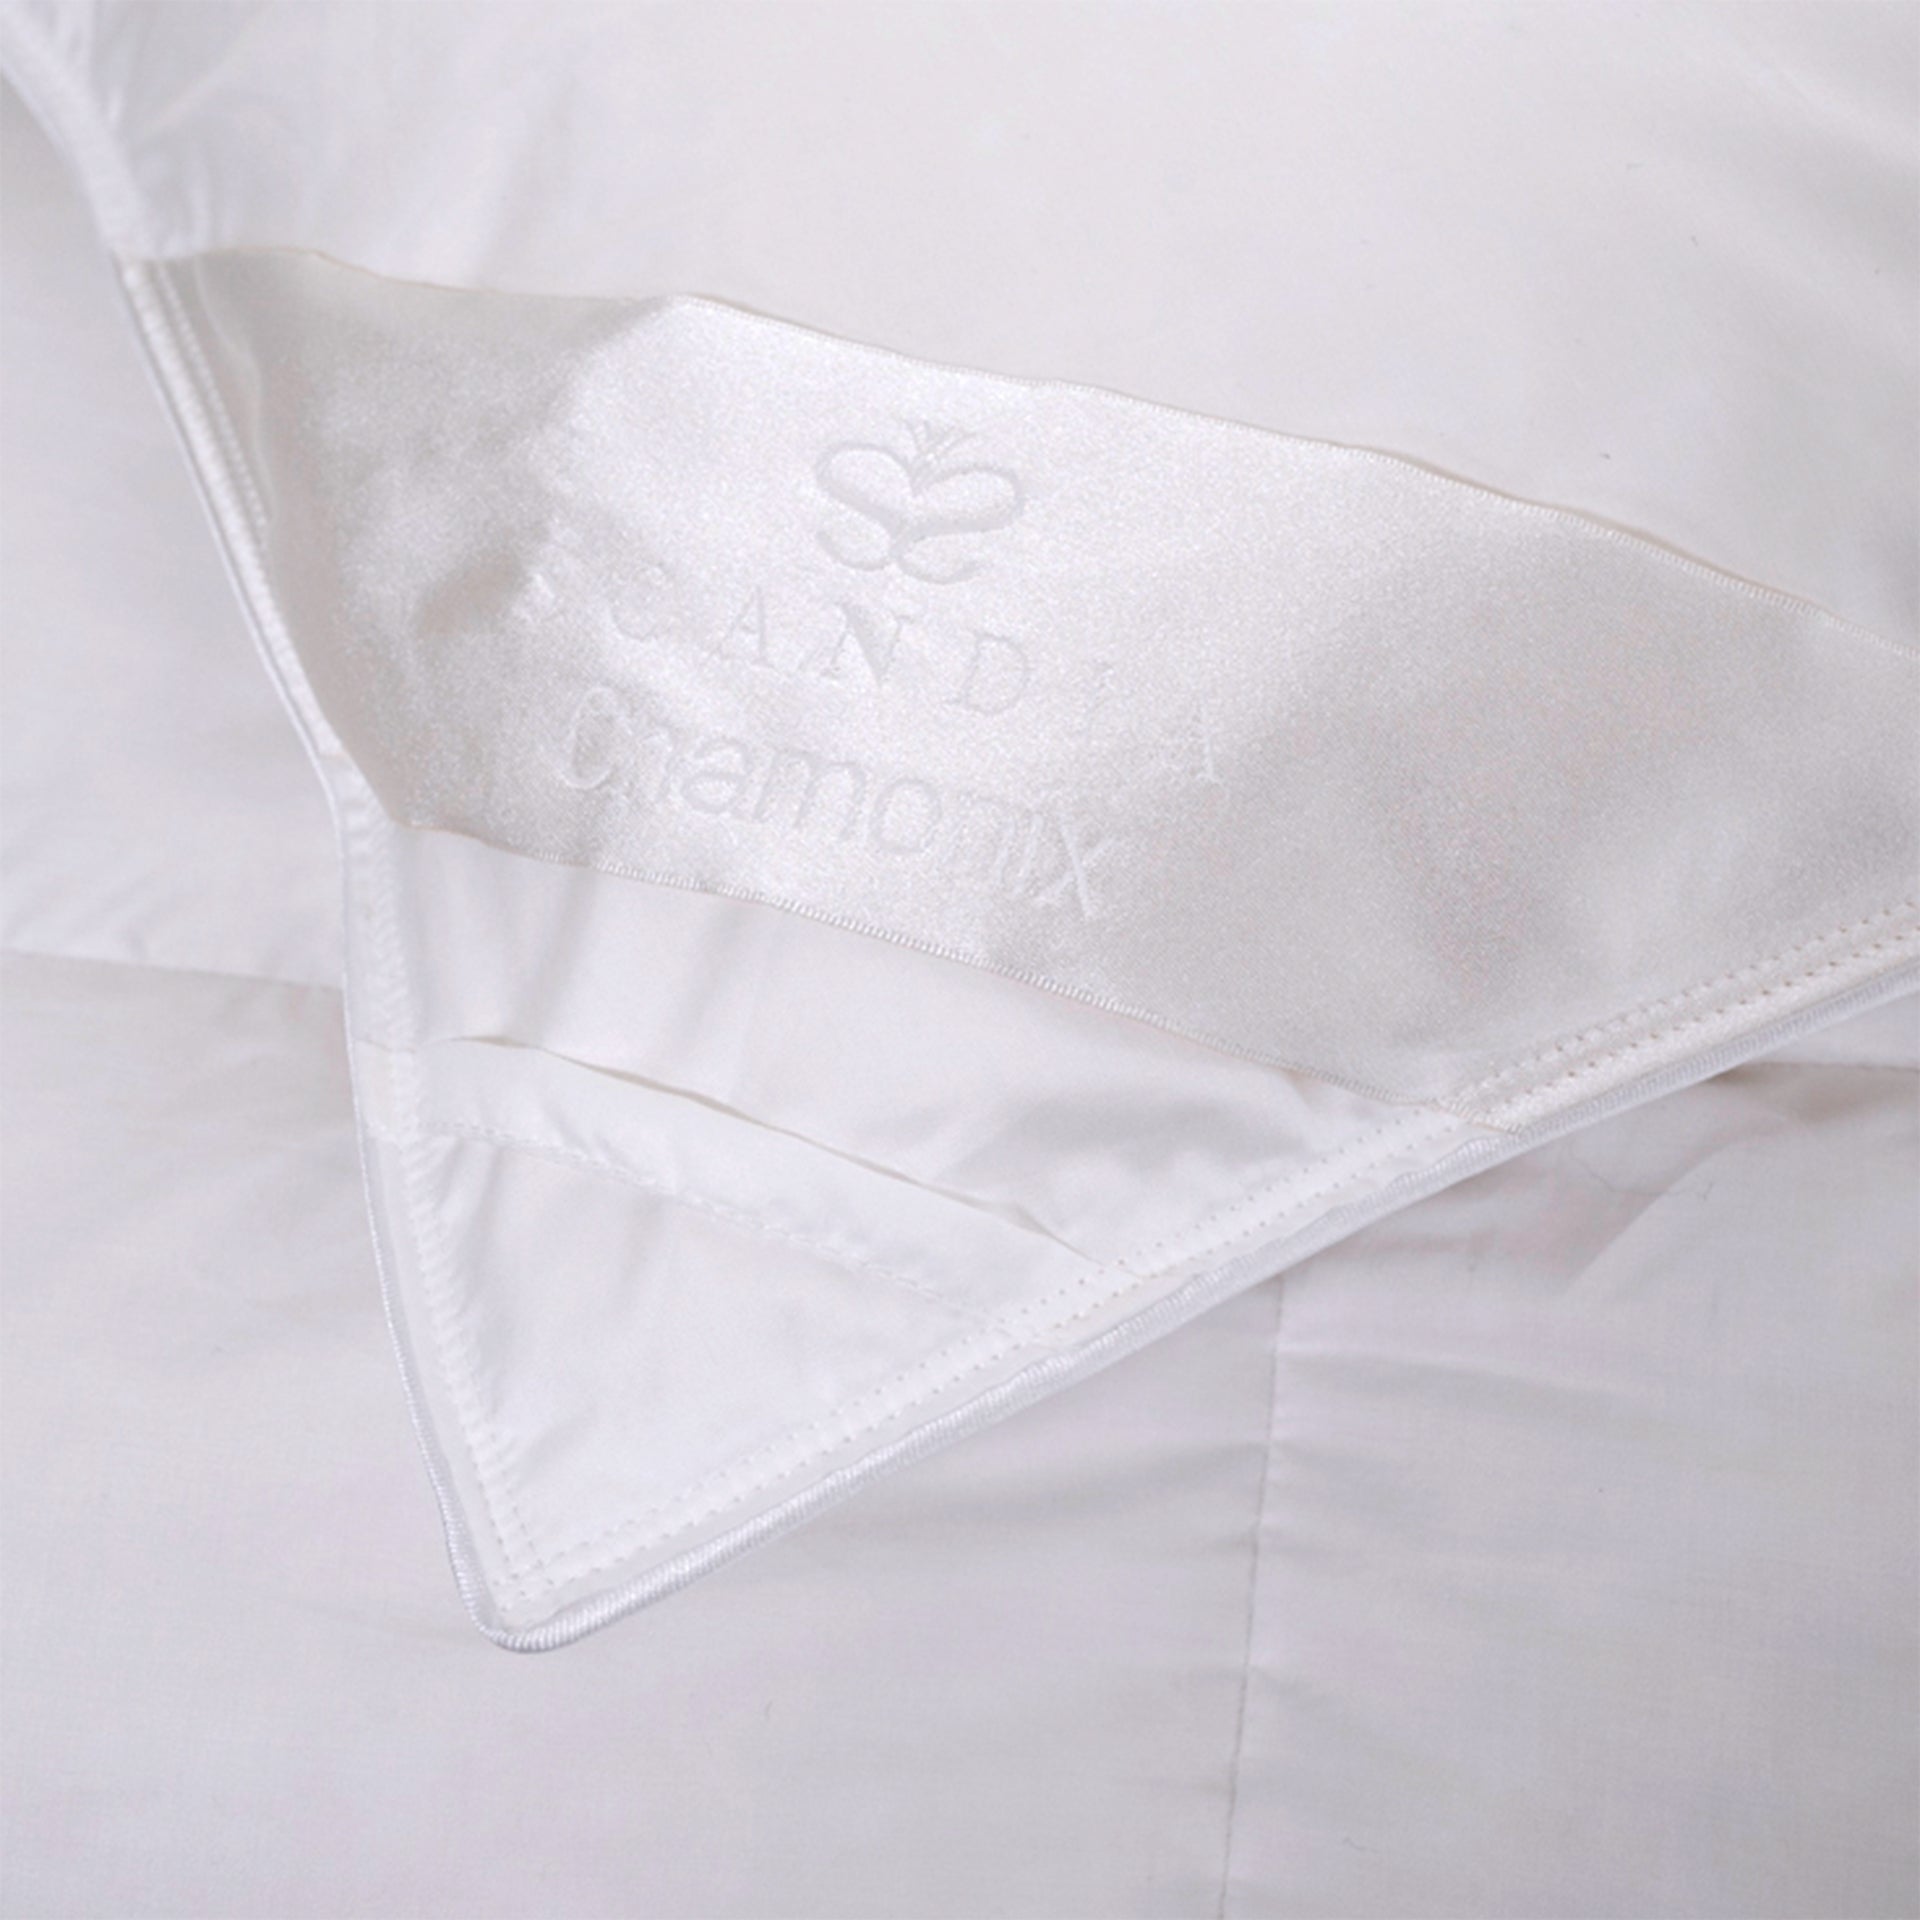 scandia home chamonix comforter corner detail to show stictching and corner silk 